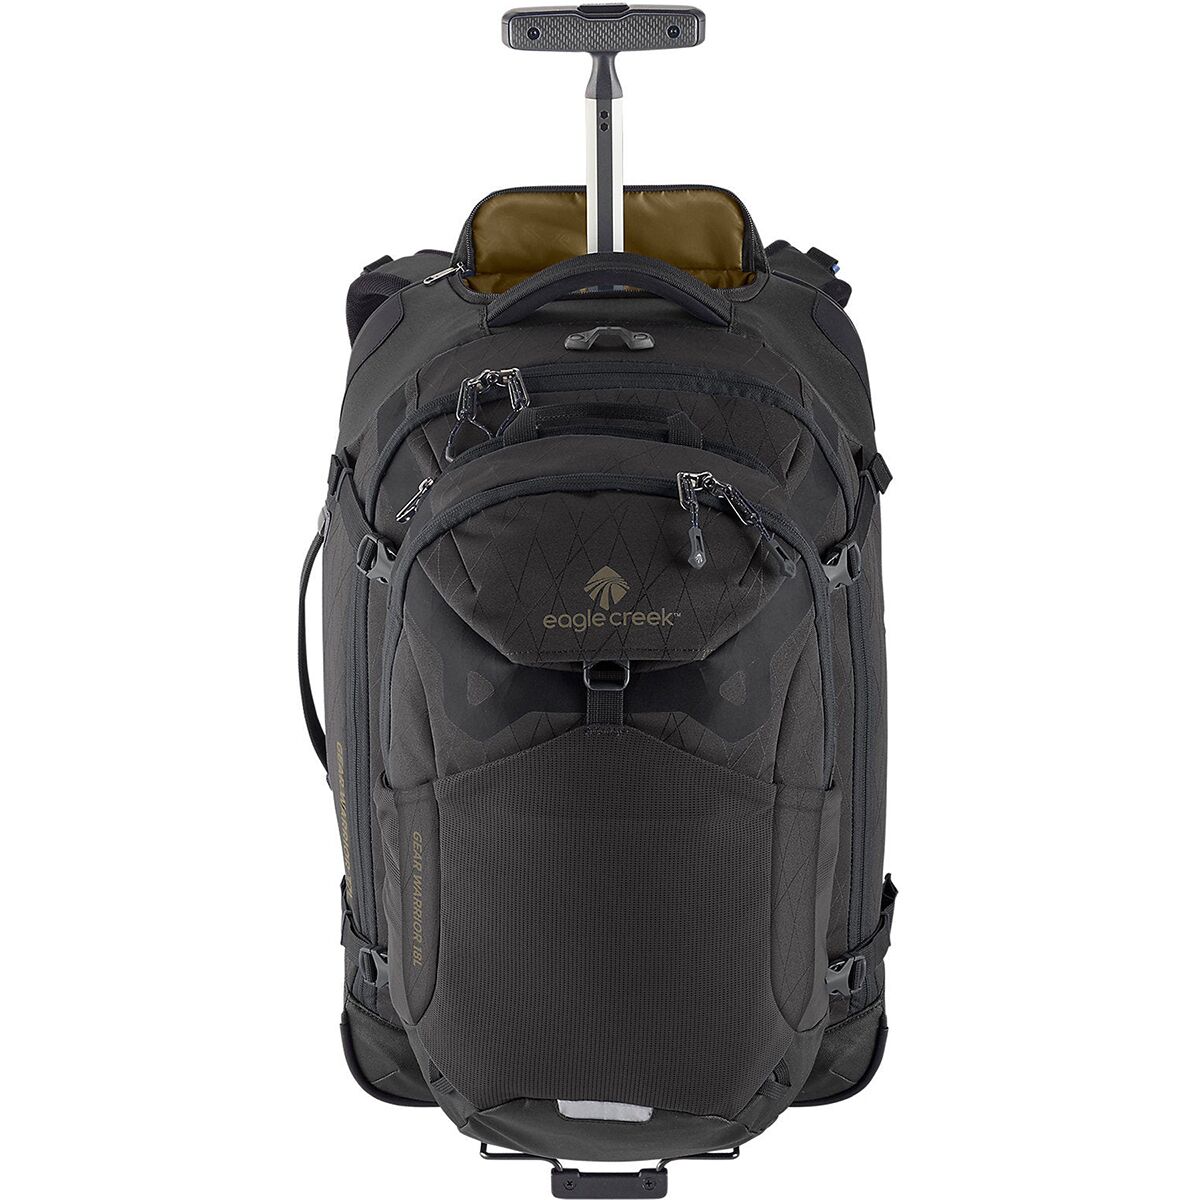 Gear Warrior Convertible Carry On Bag